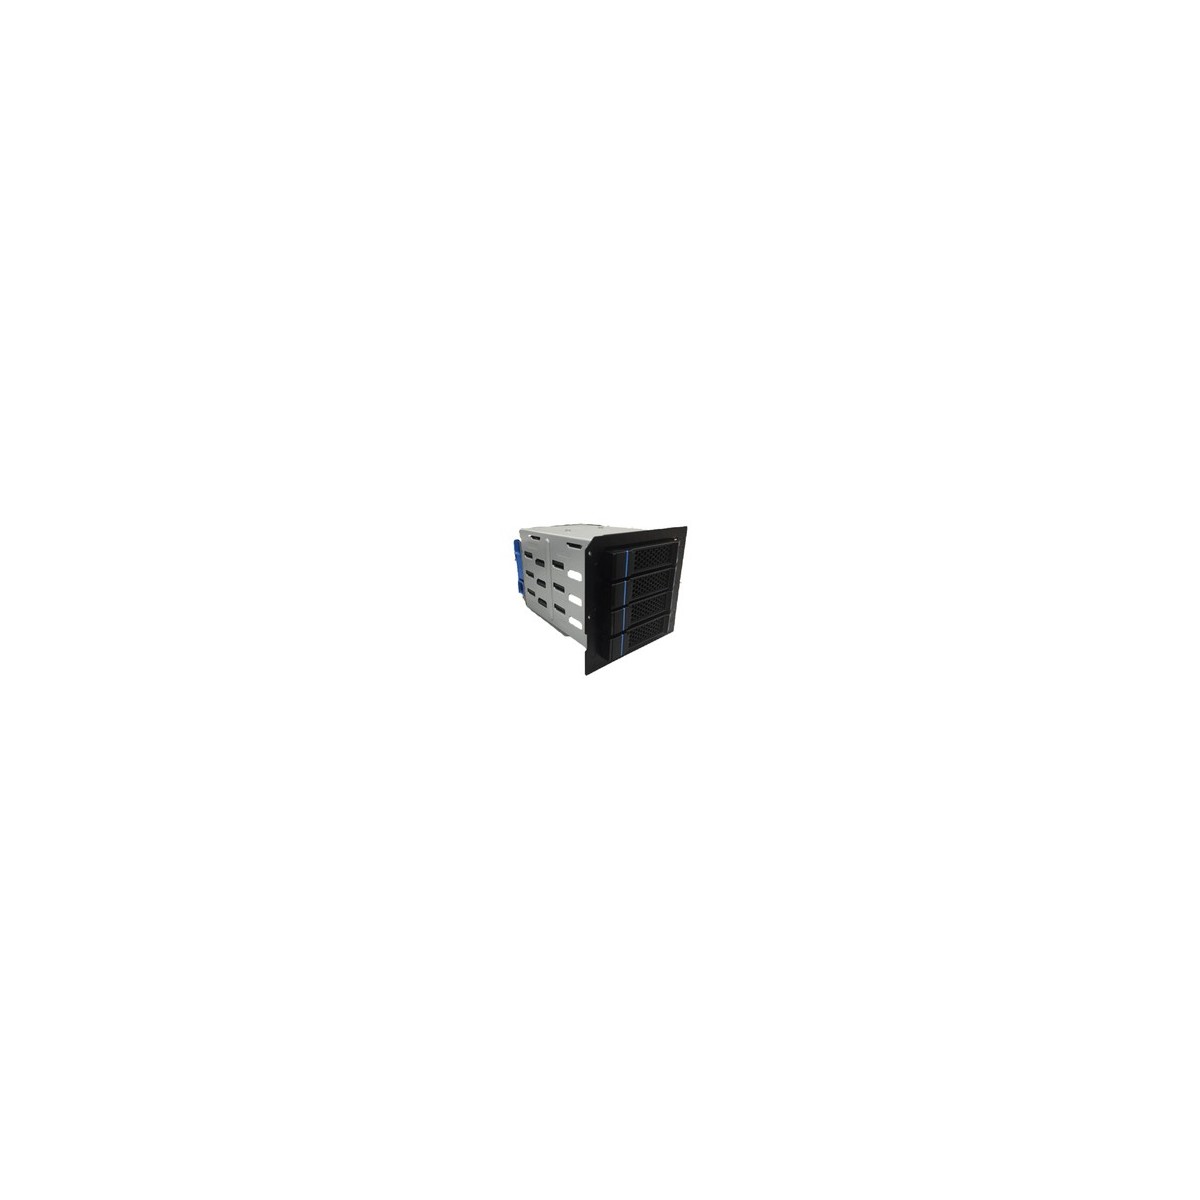 Chenbro Micom 384-10501-2101A0 - 8.89 cm (3.5) - Storage drive tray - 3.5 - Black - 1 fan(s) - 8 cm